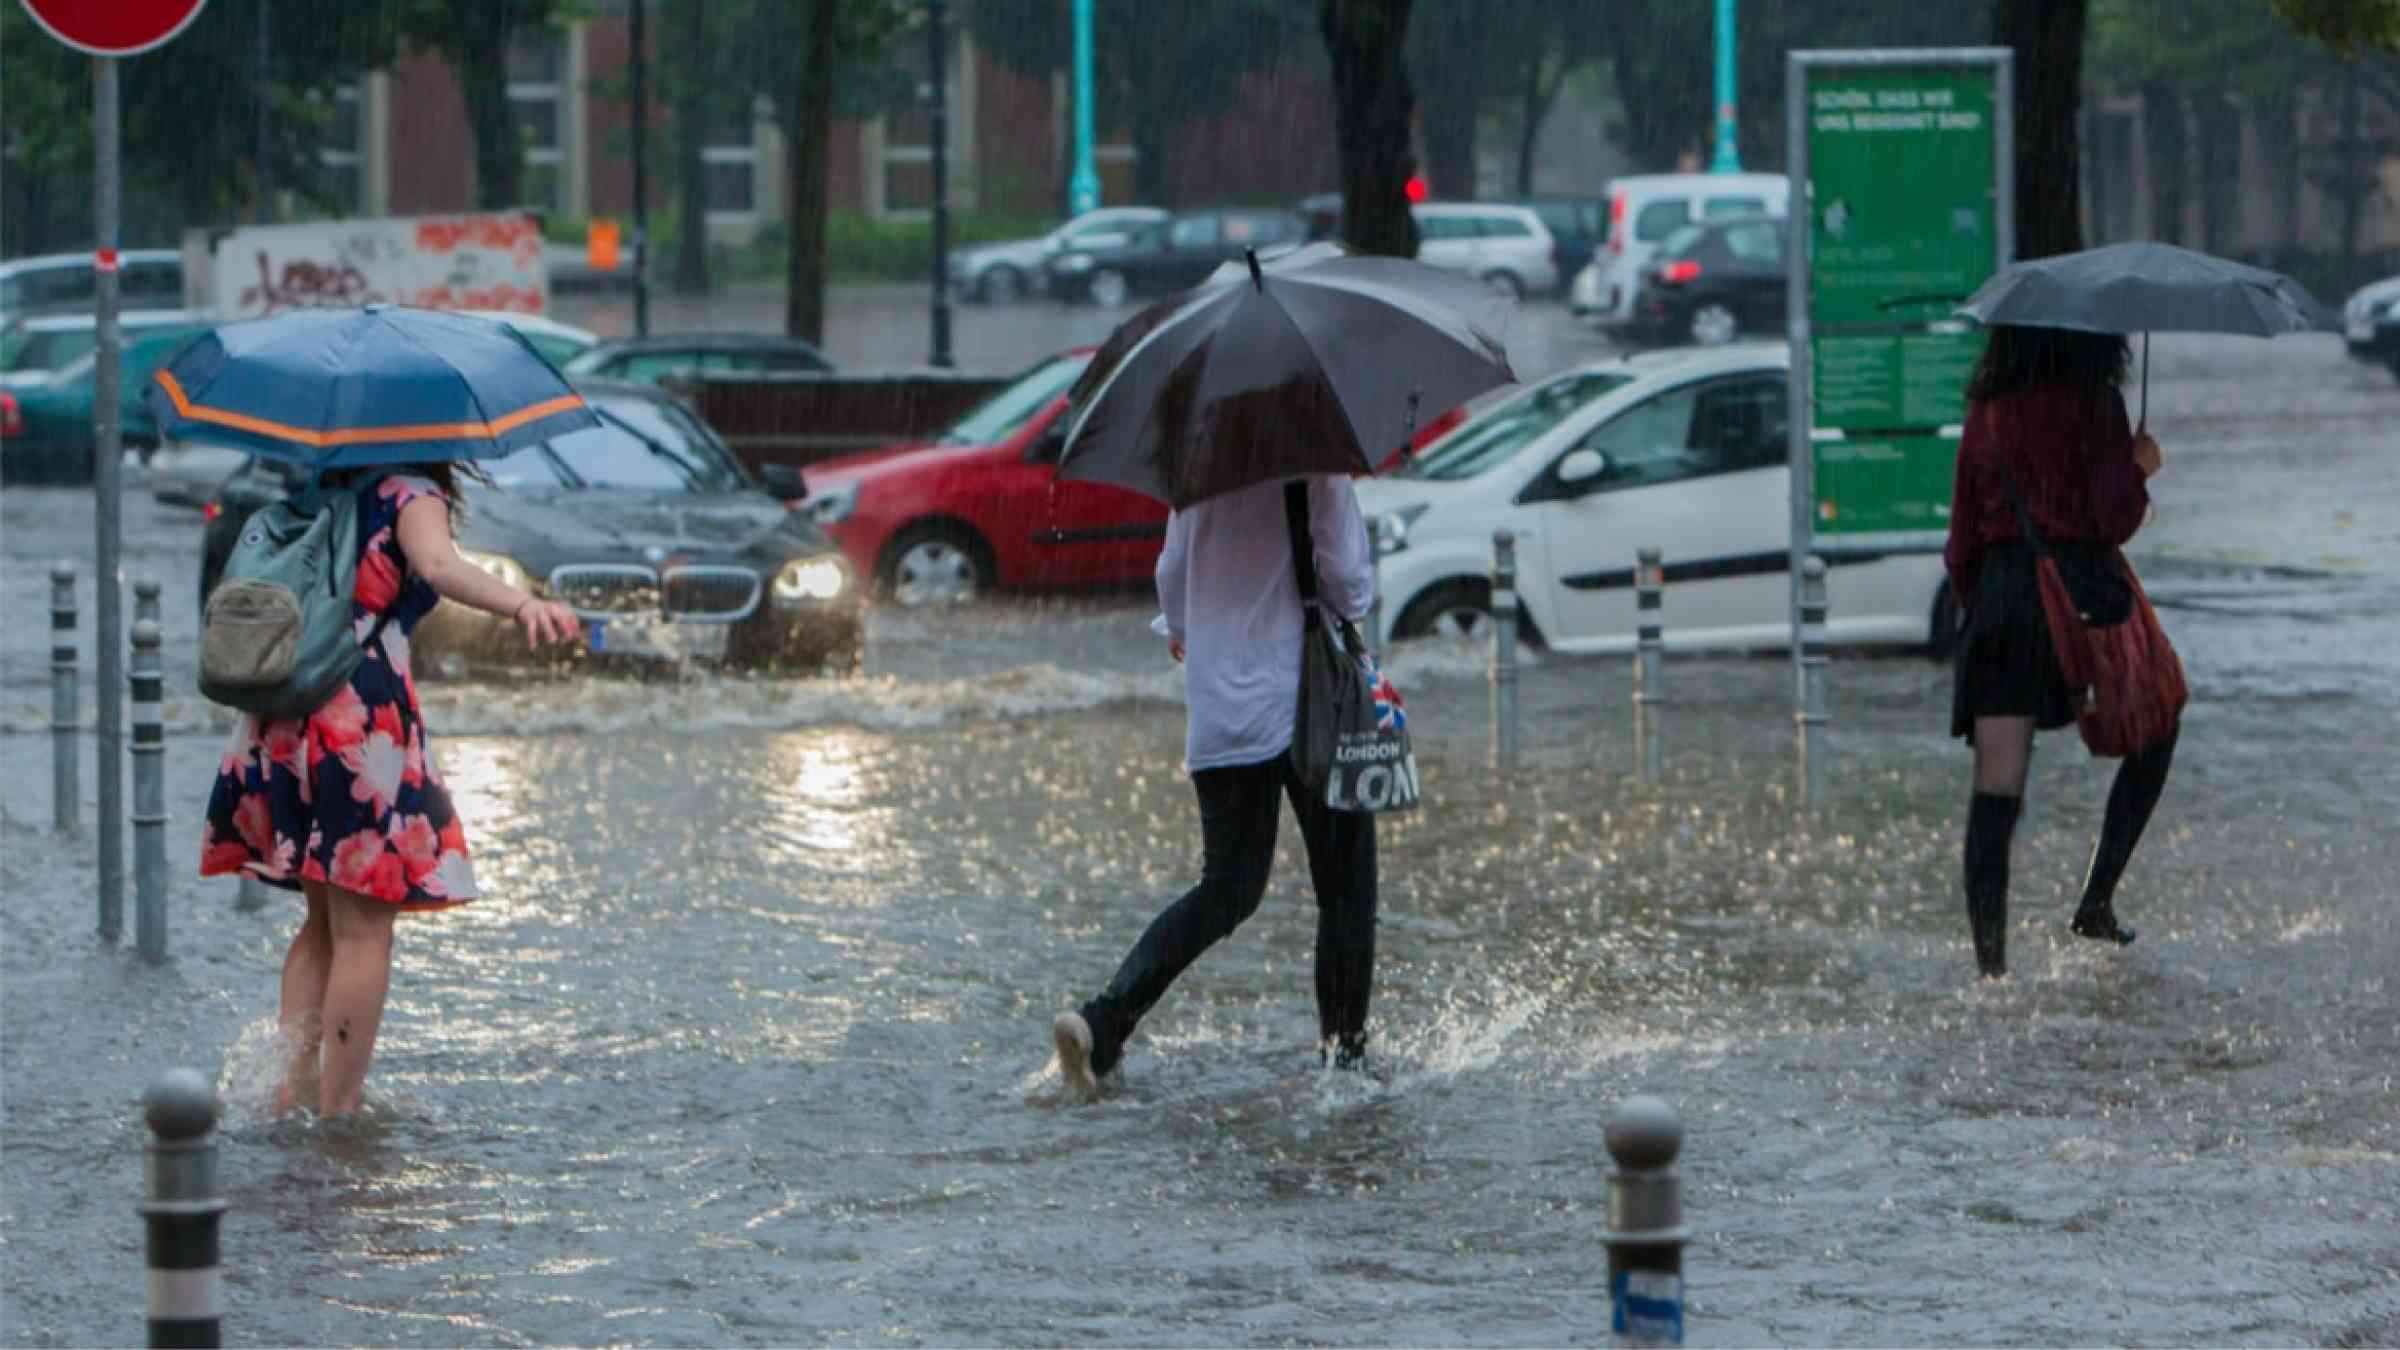 Three women with umbrellas walking through water in floode streets, Berlin, Germany (2017)